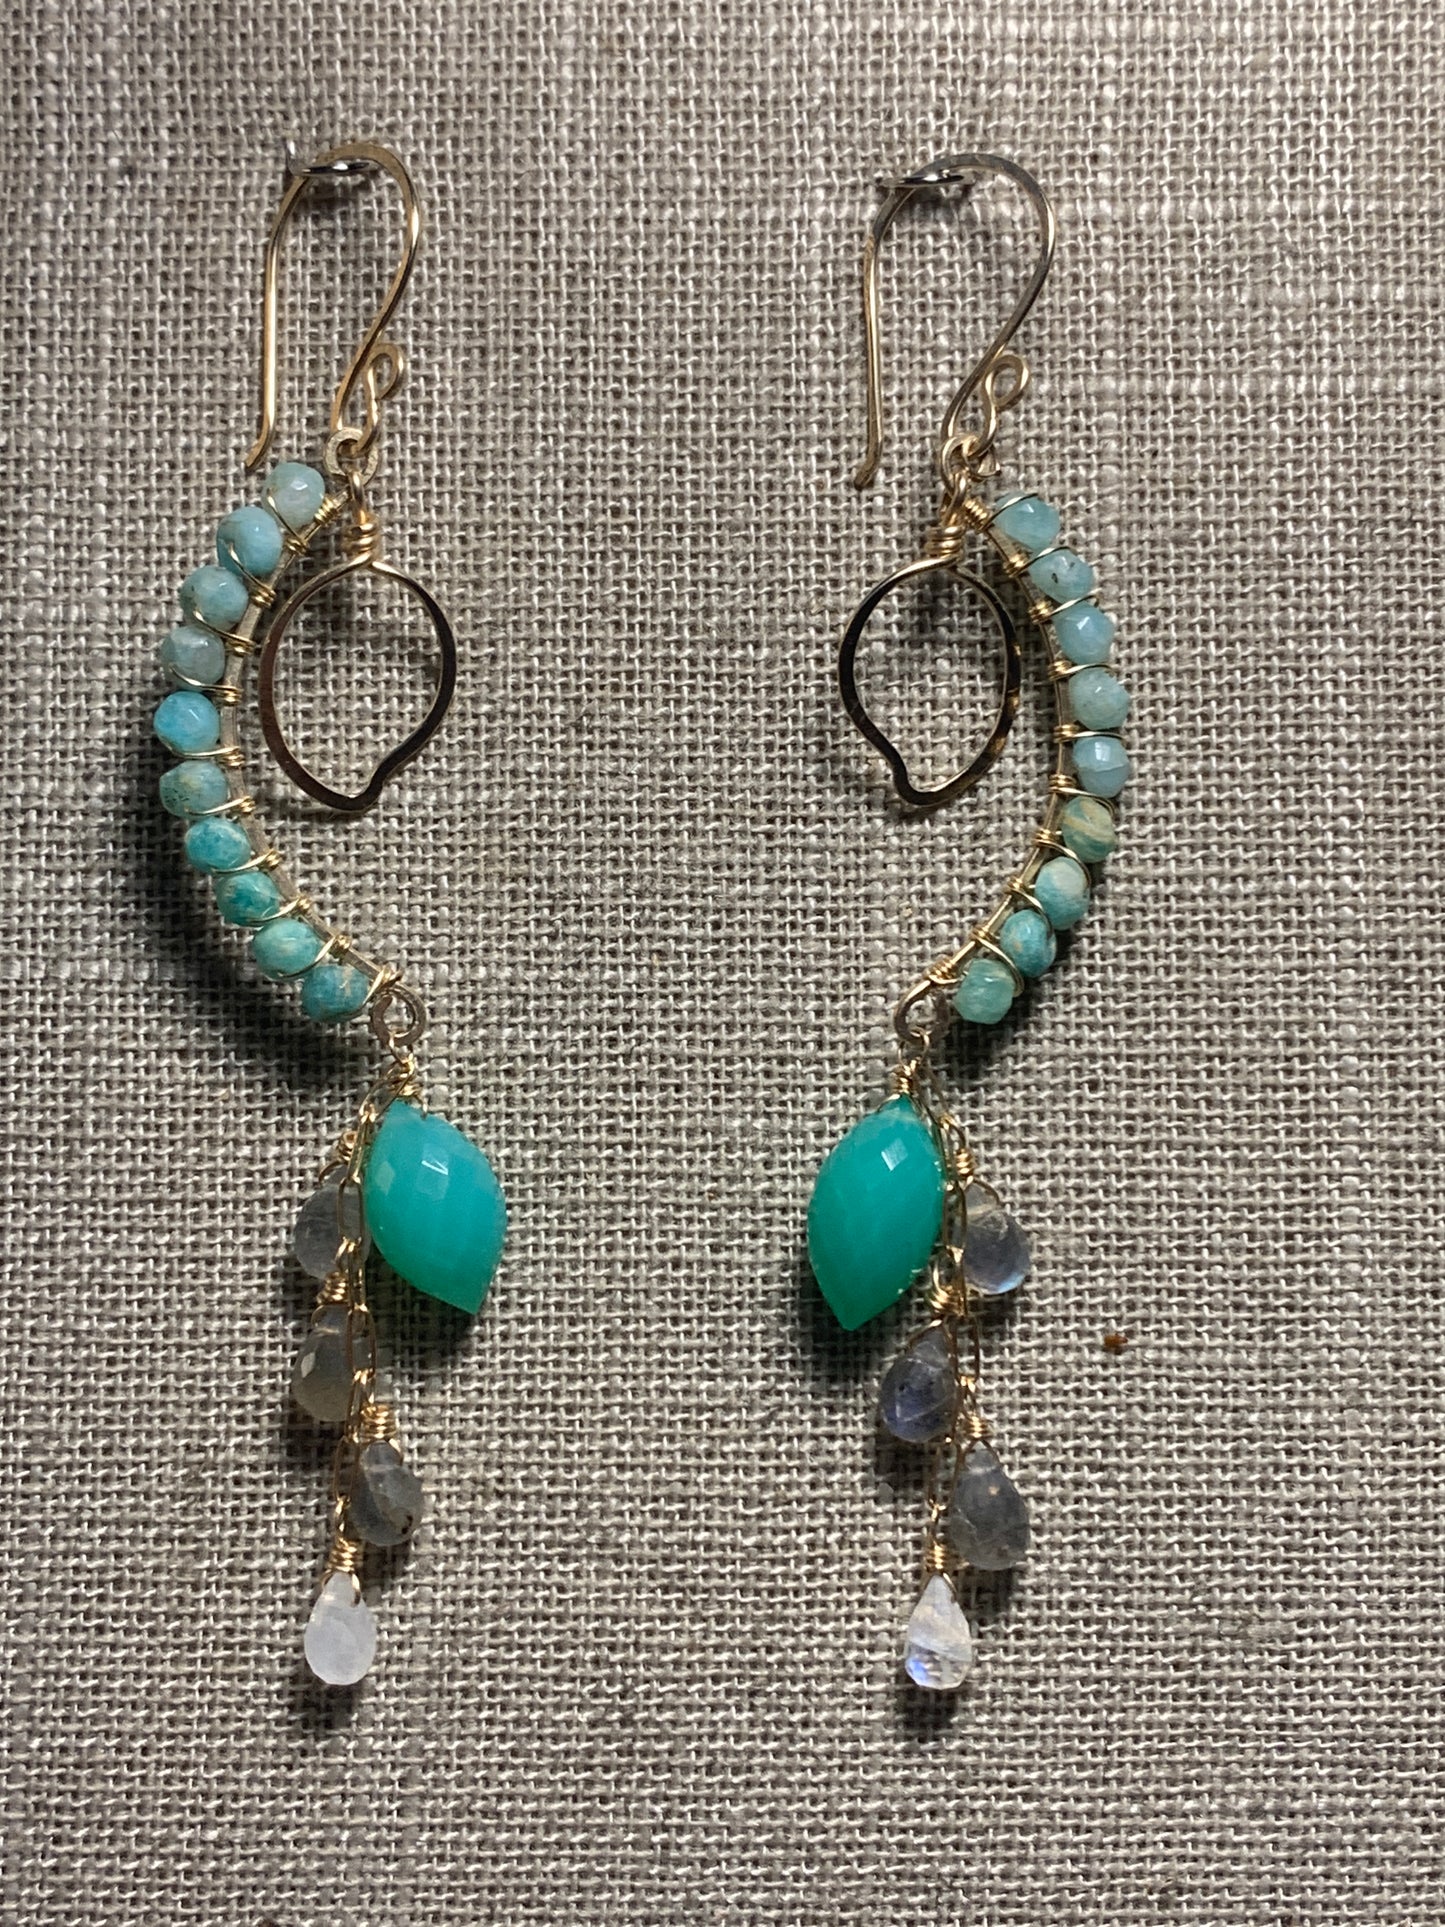 14kt Goldfilled Earrings, Amazonite, Chrysoprase, Labradorite, Rainbow Moonstone